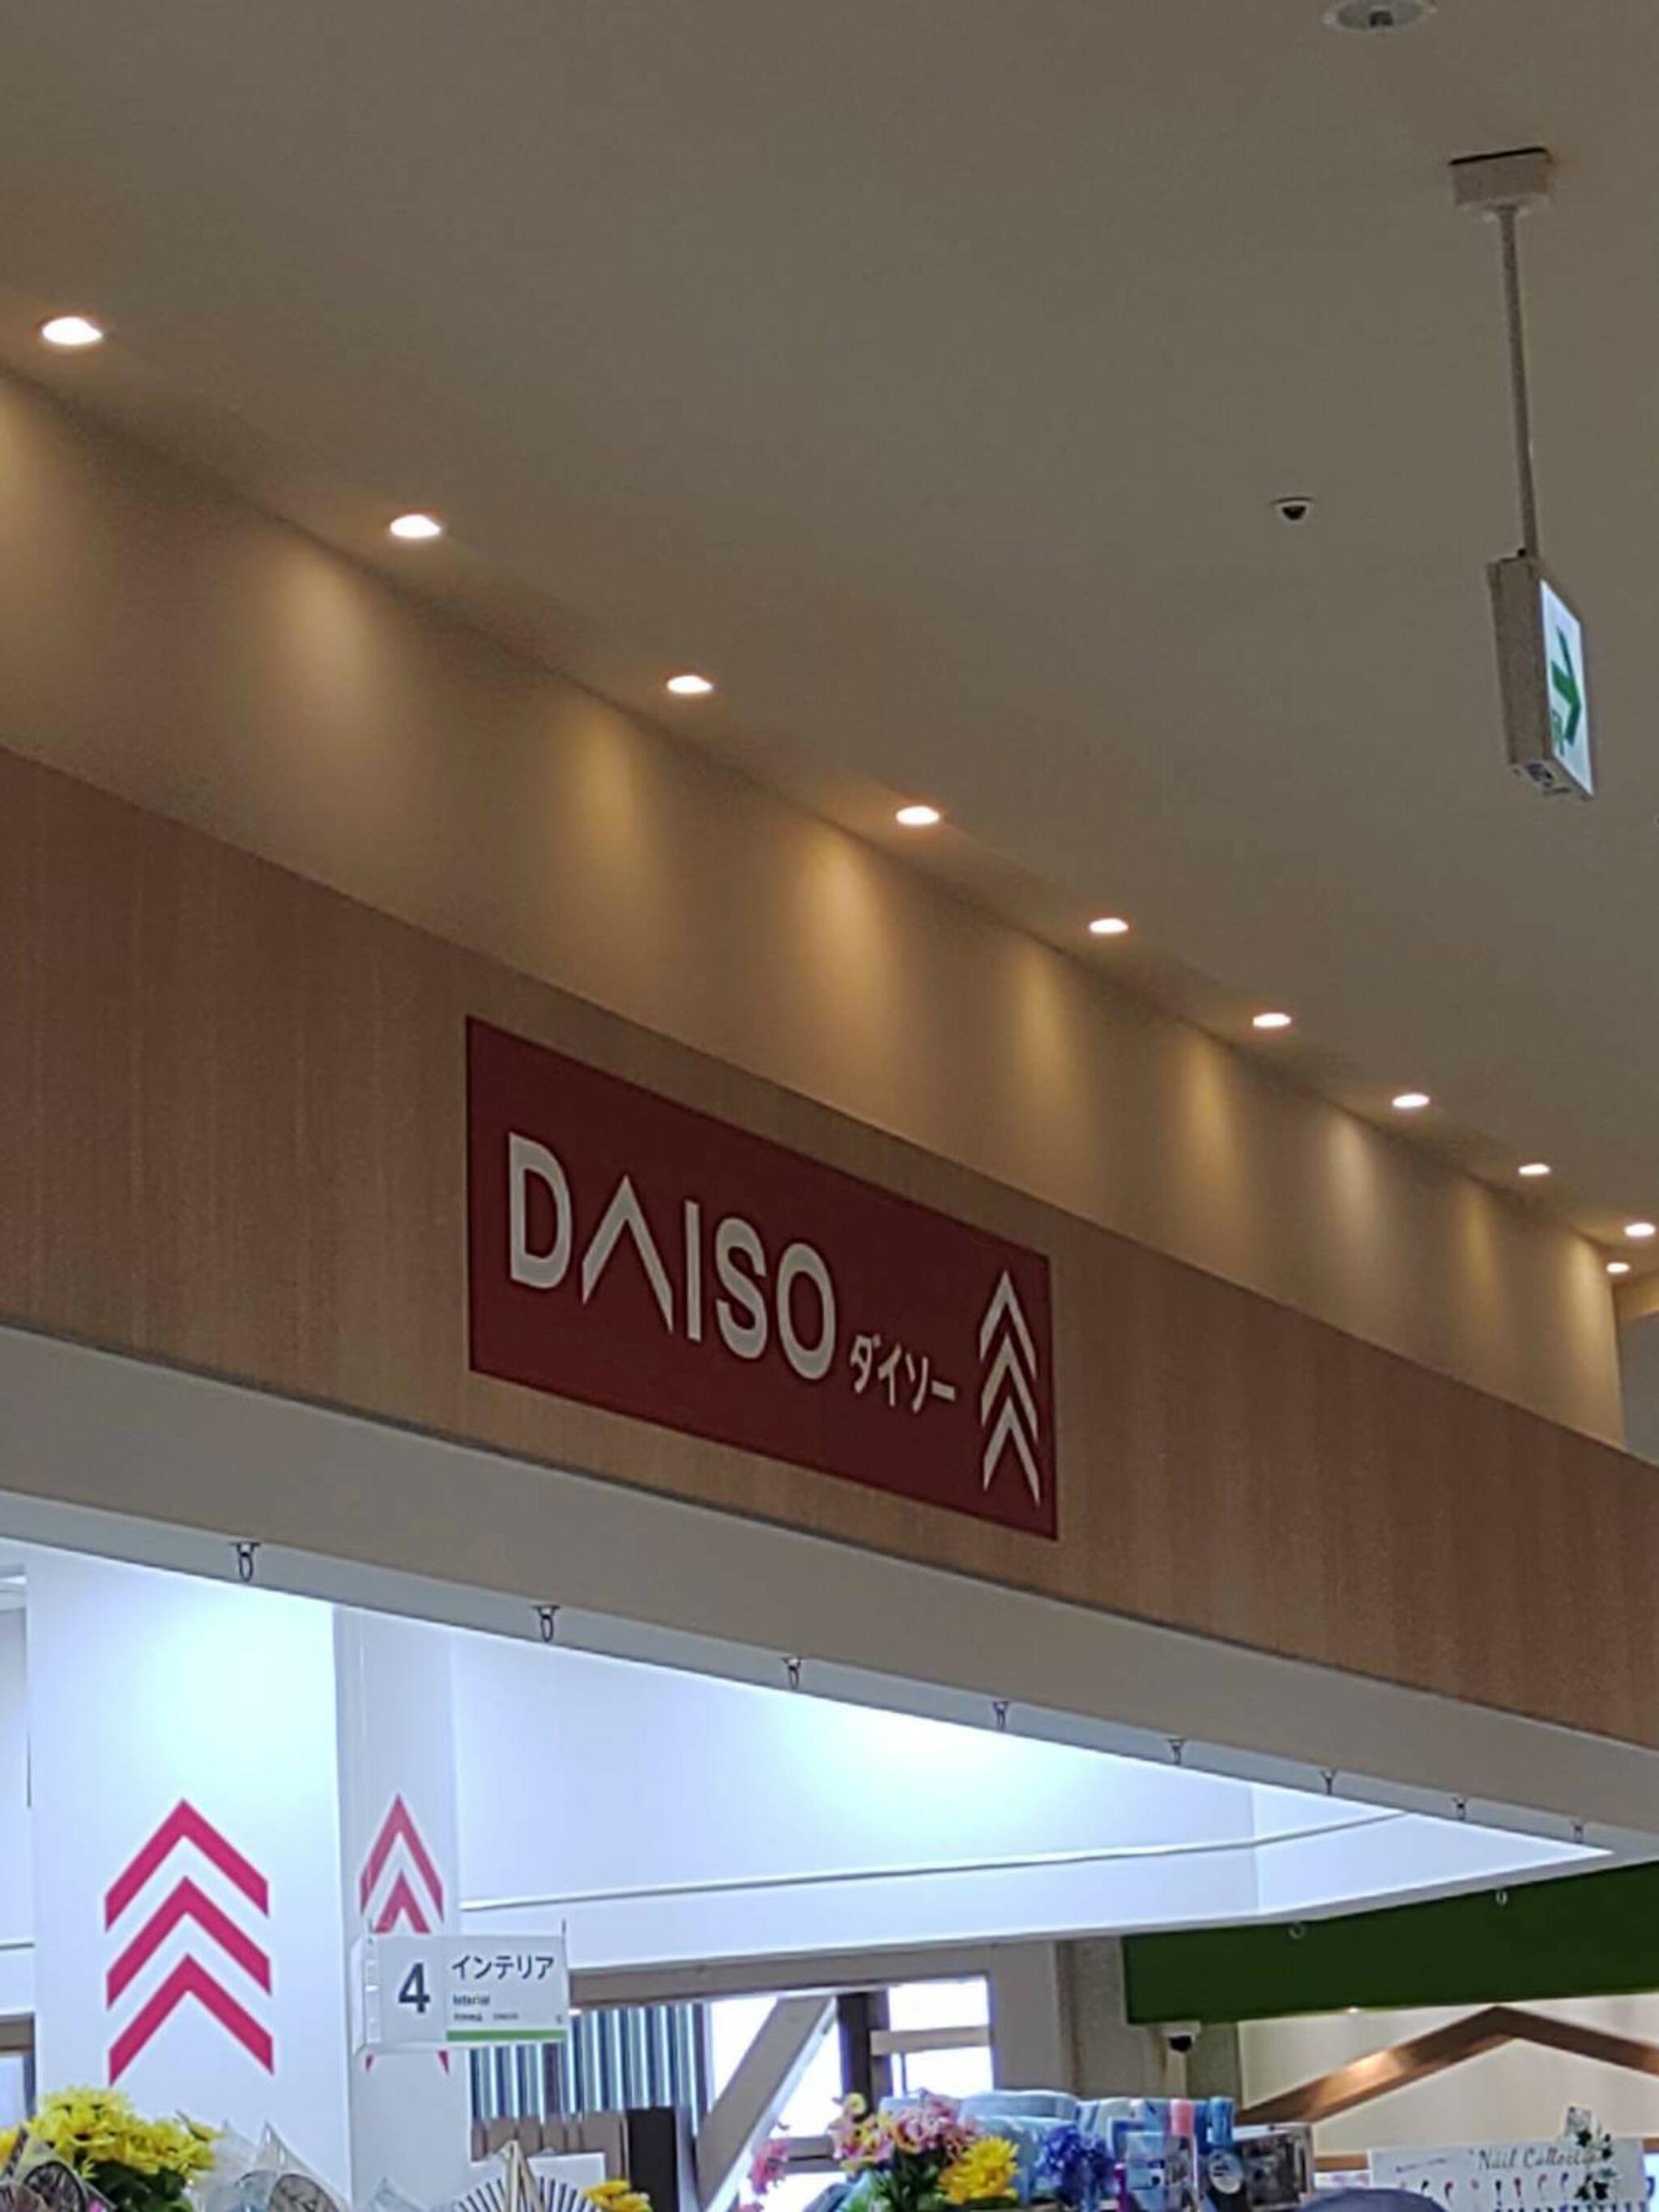 DAISO アリオ倉敷店の代表写真1